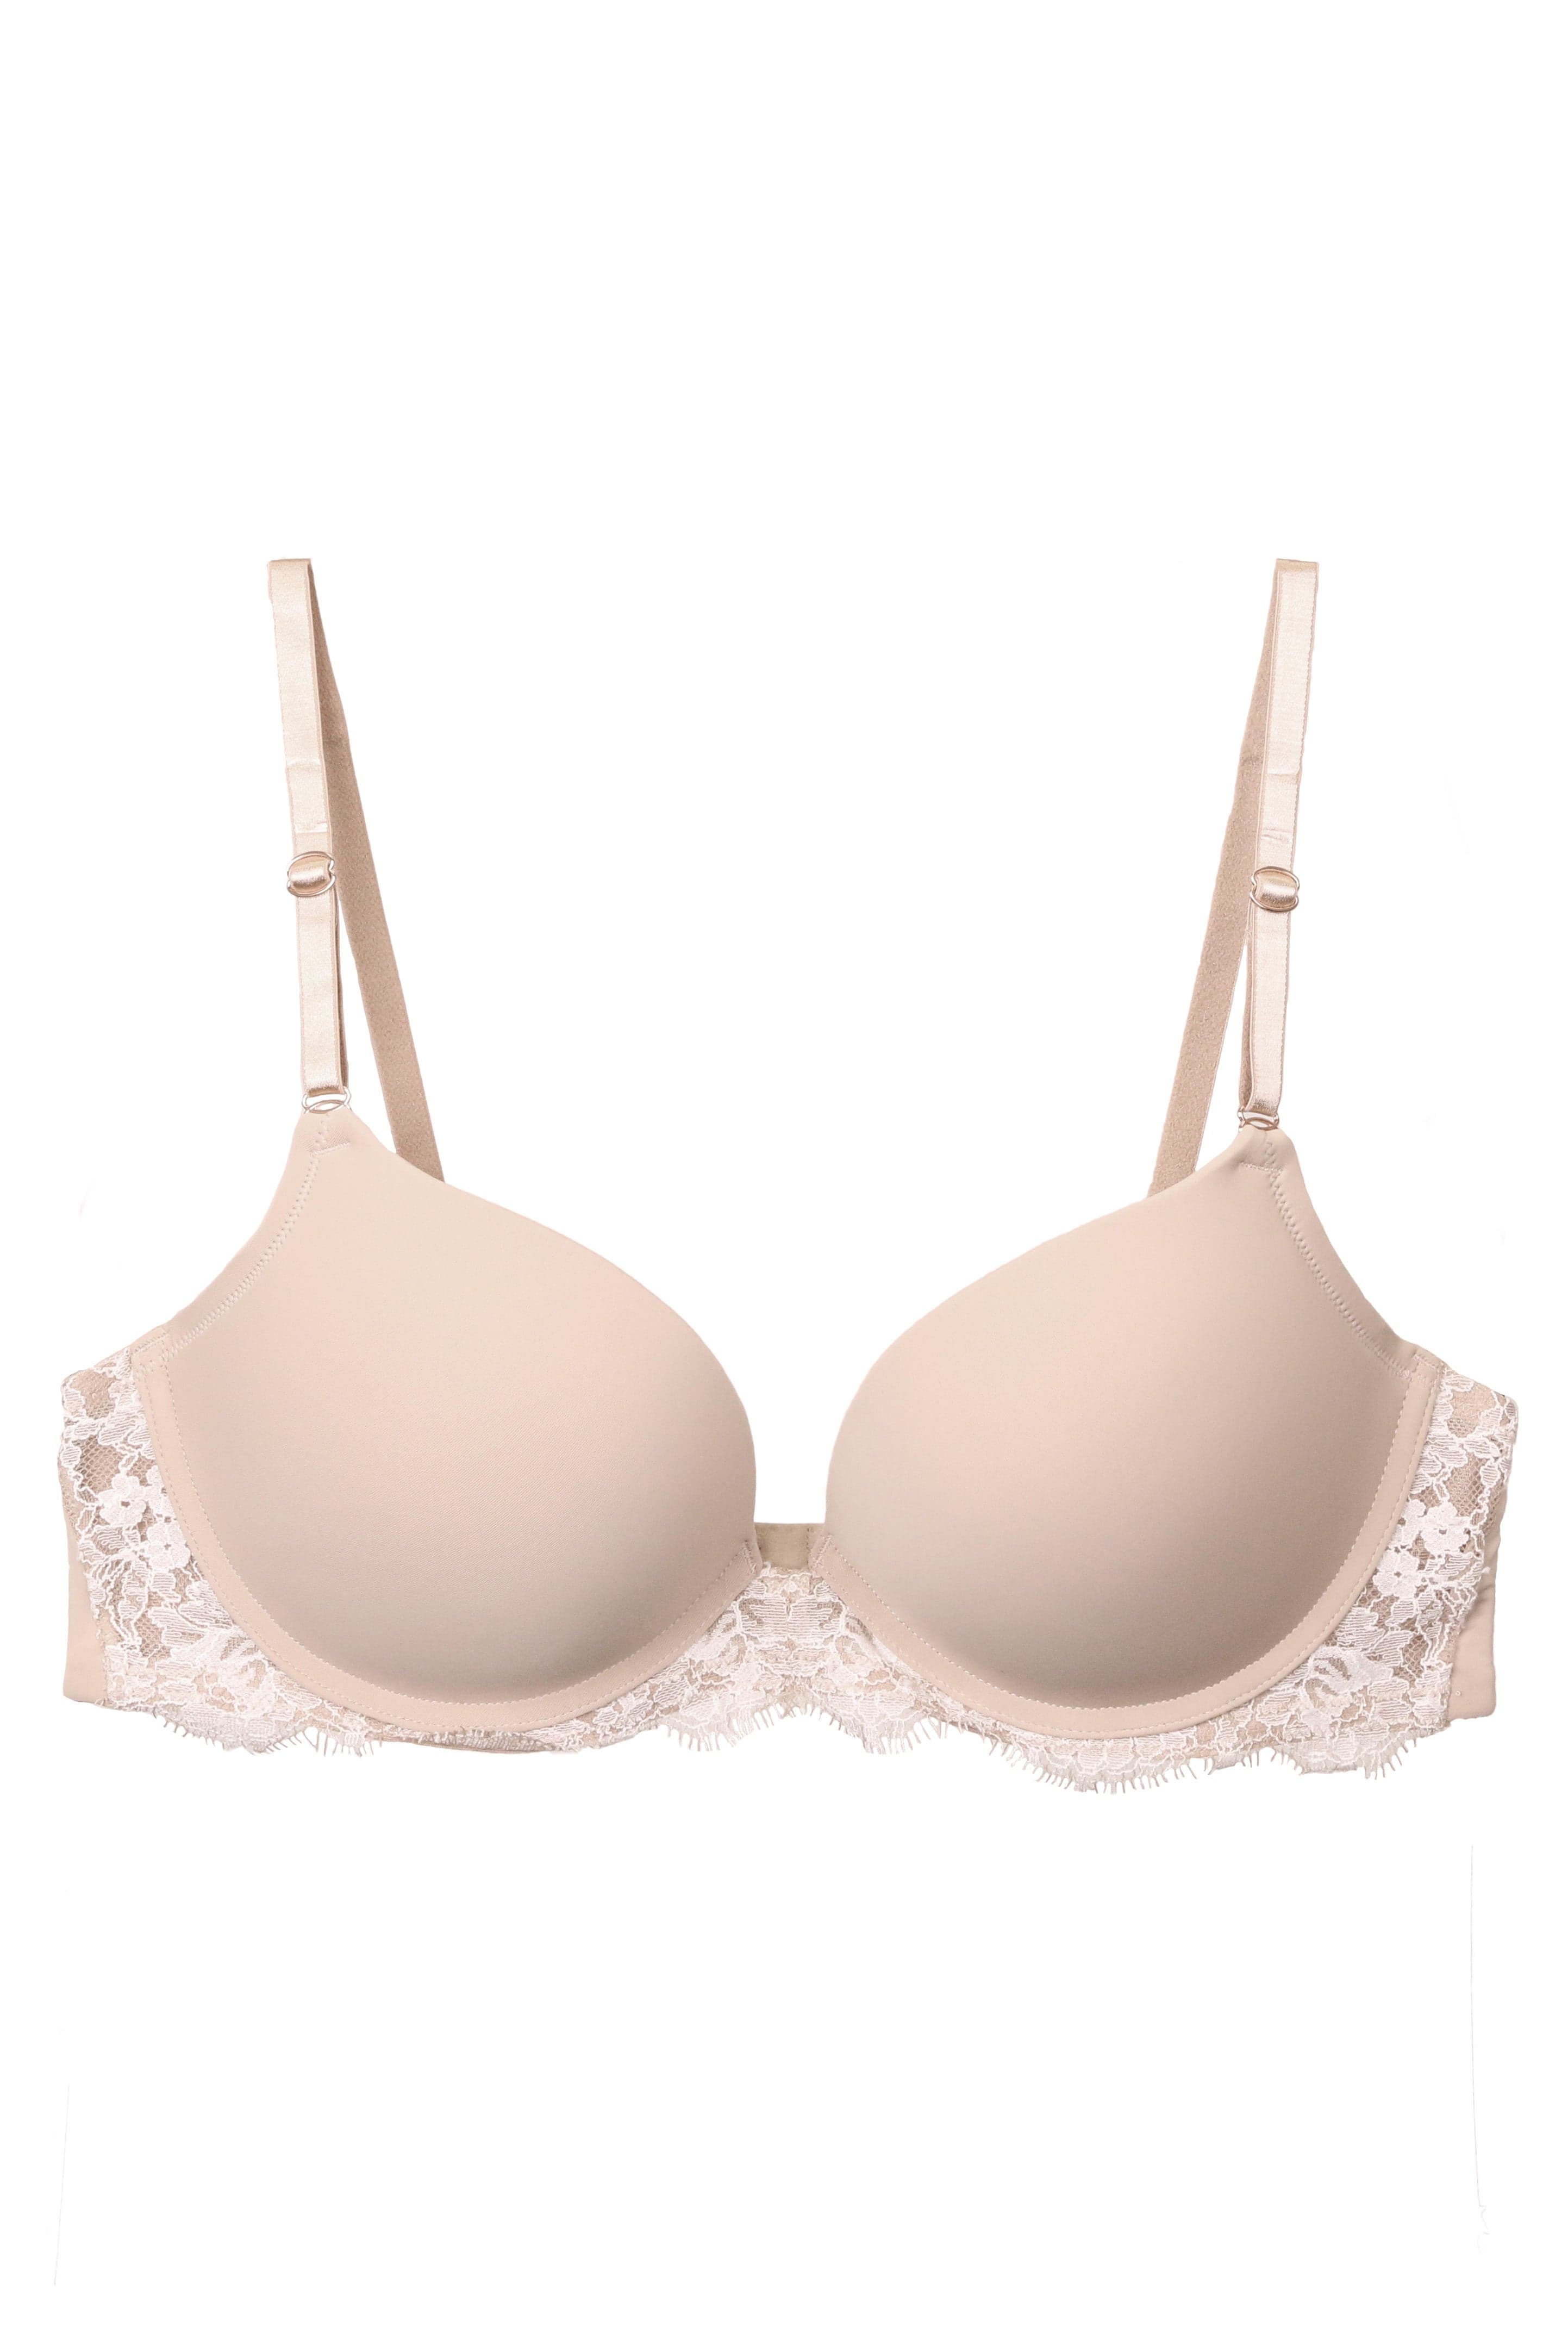 Buy Women's Bras 30 B White Demi Victoria's Secret Spots Lingerie